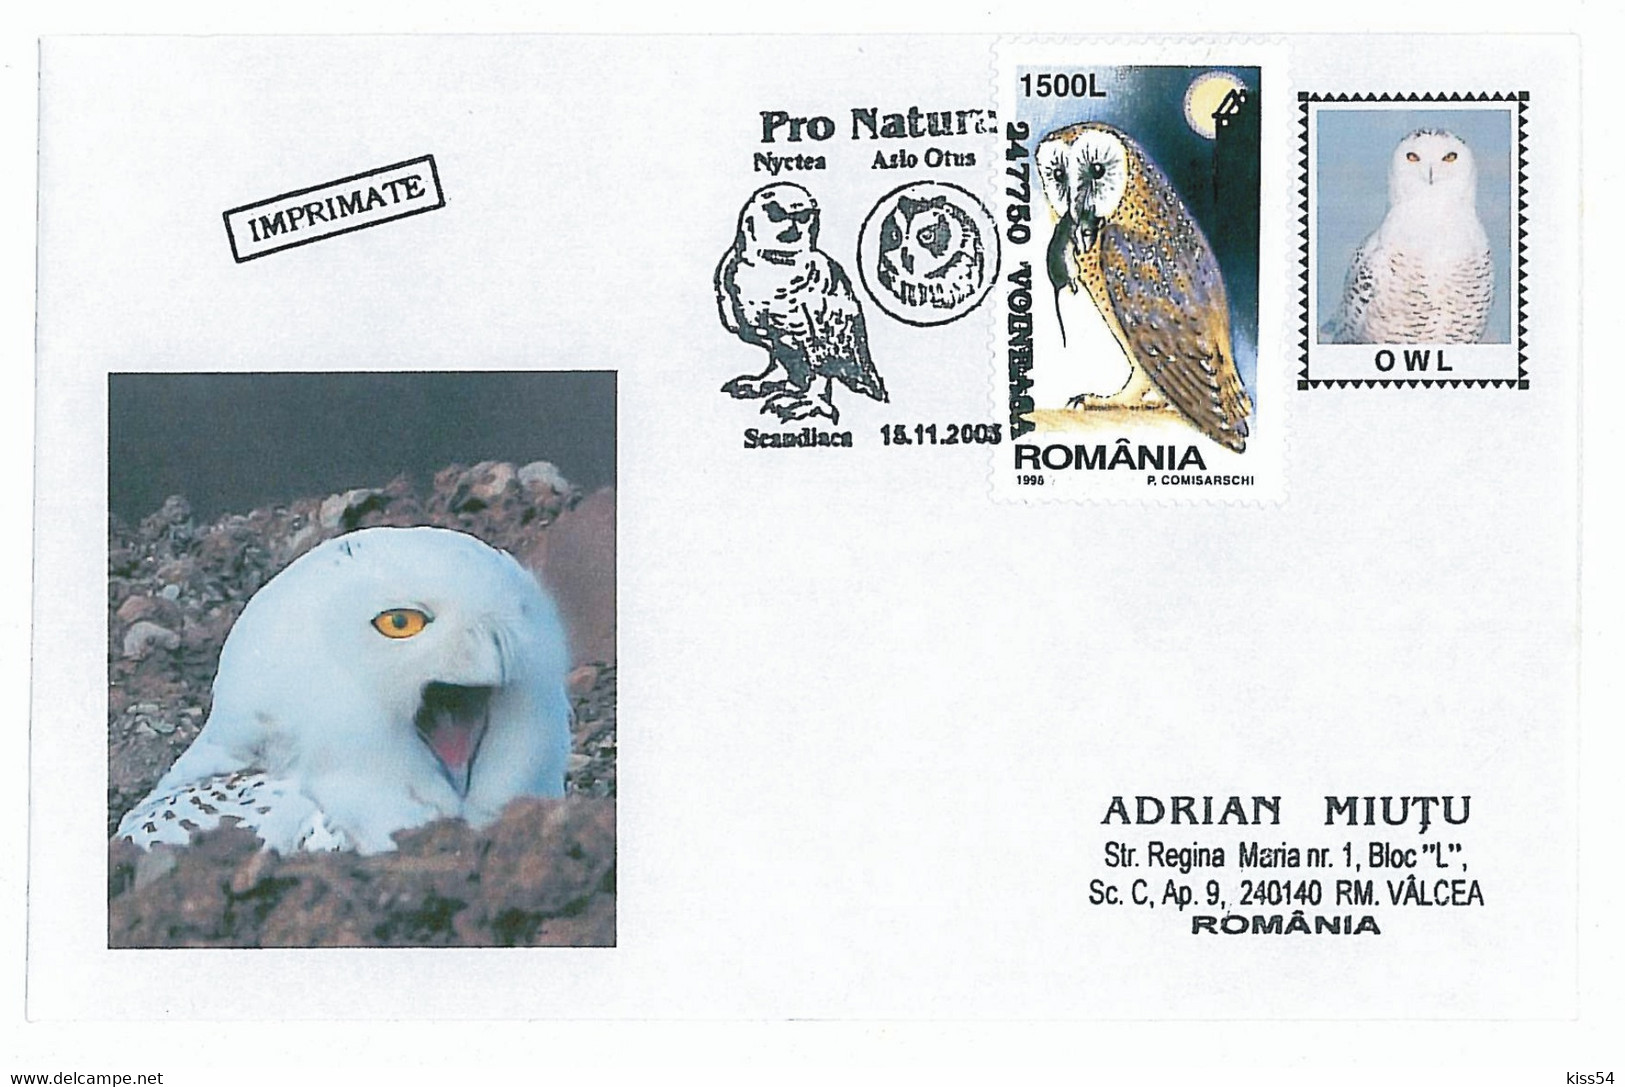 COV 68 - 253 OWL, Romania - Cover - Used - 2005 - Hiboux & Chouettes